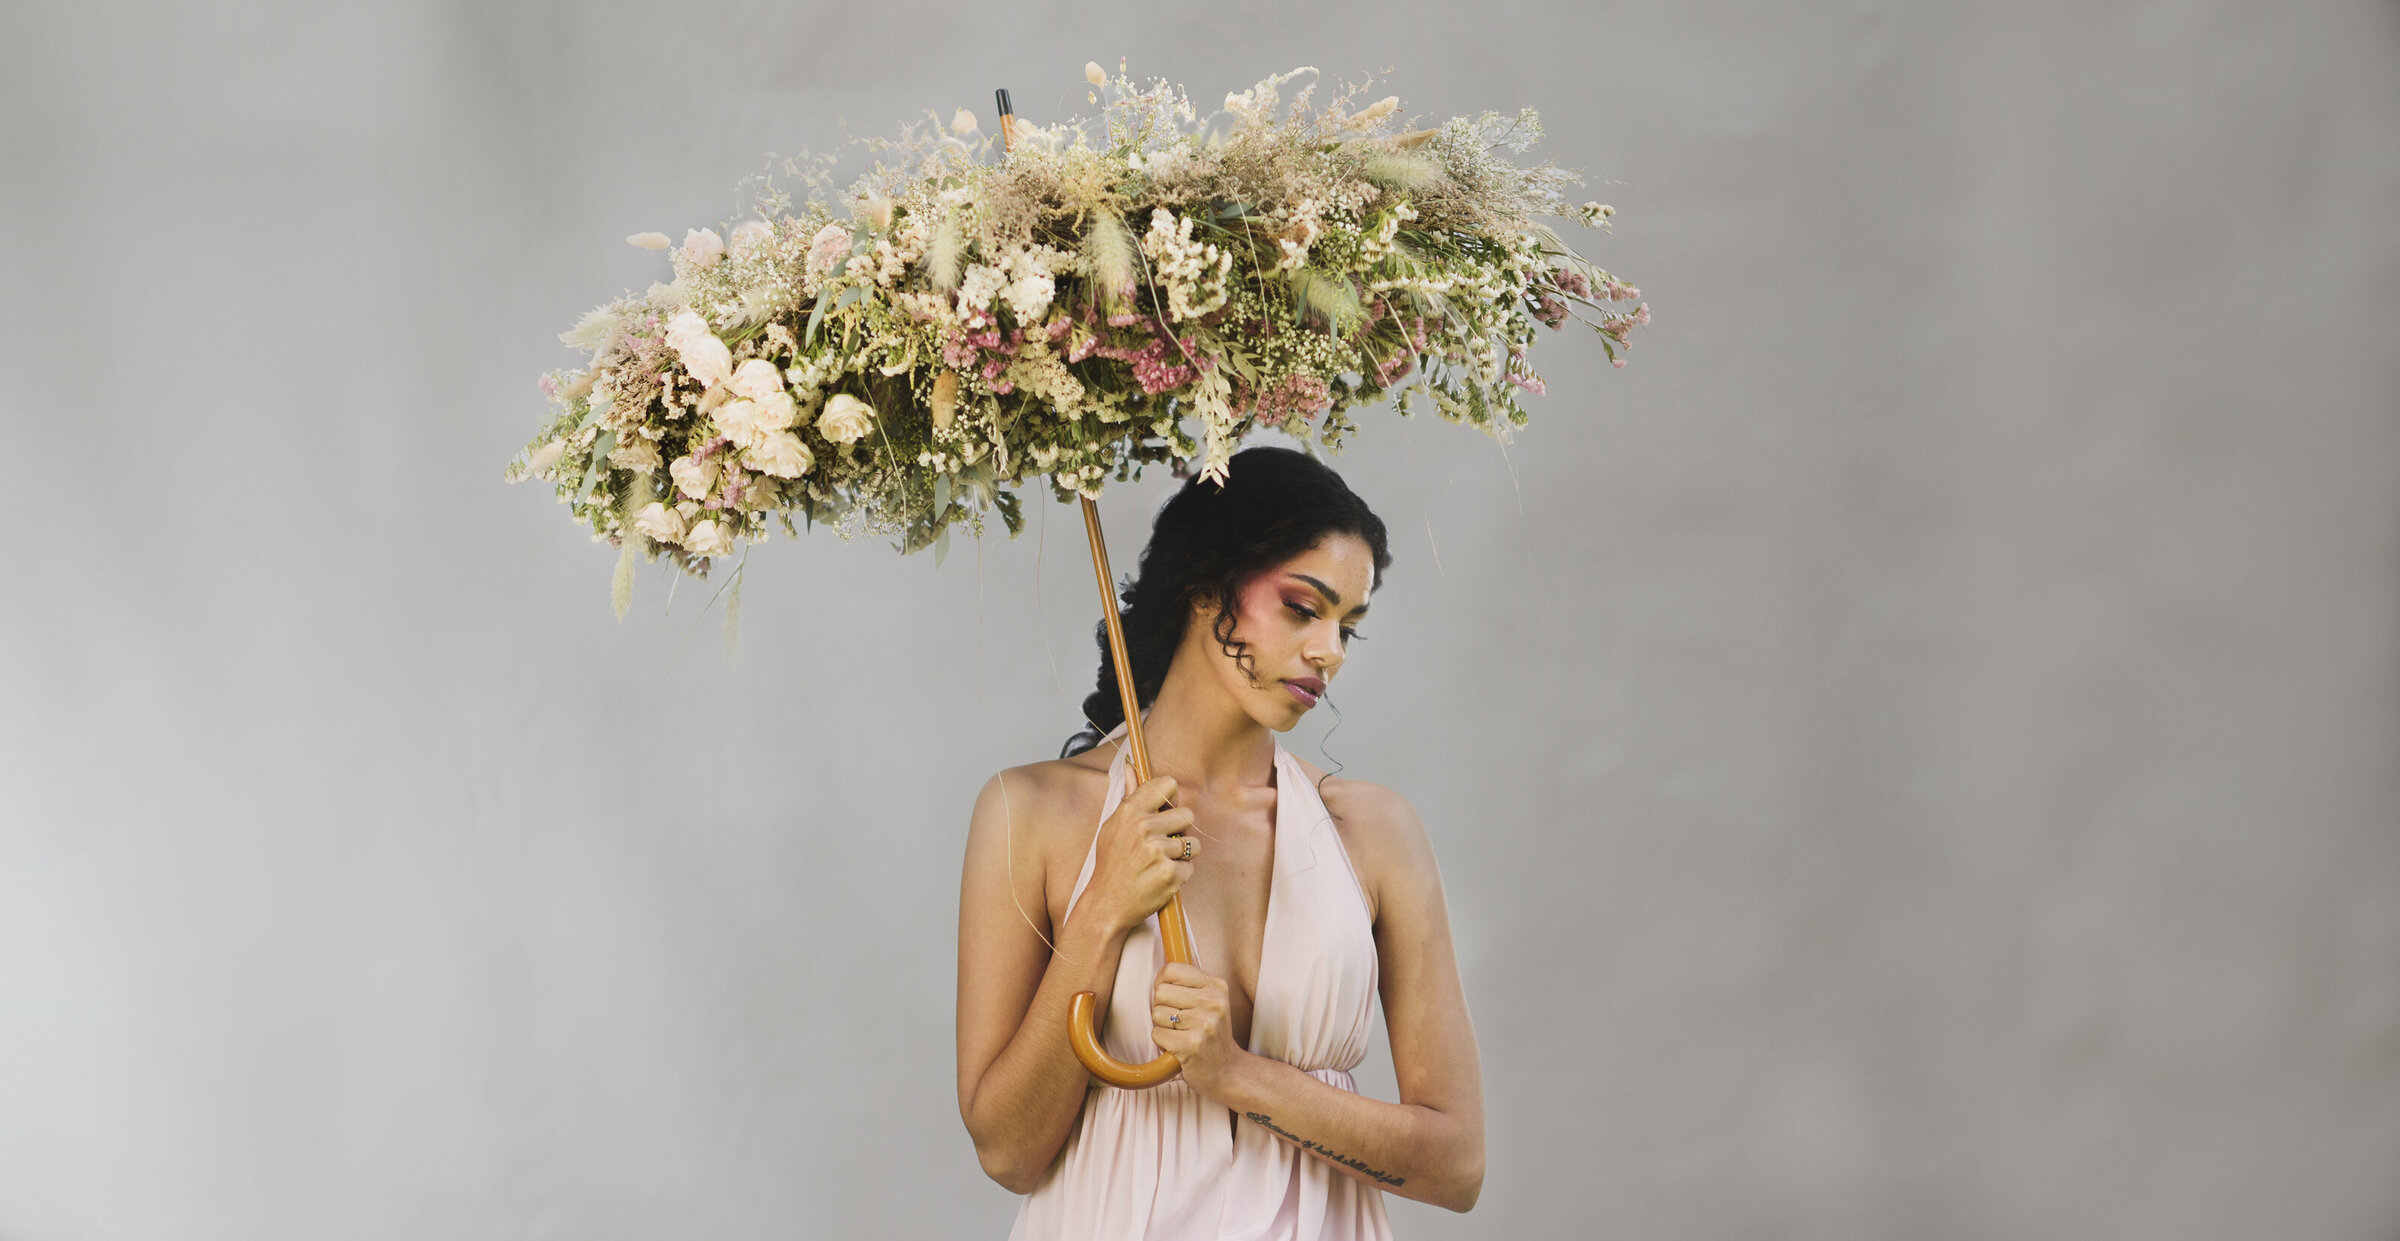 Model holding floral umbrella - floral artistry -Fleuris Studio & Blooms - photo by Helene Cyr